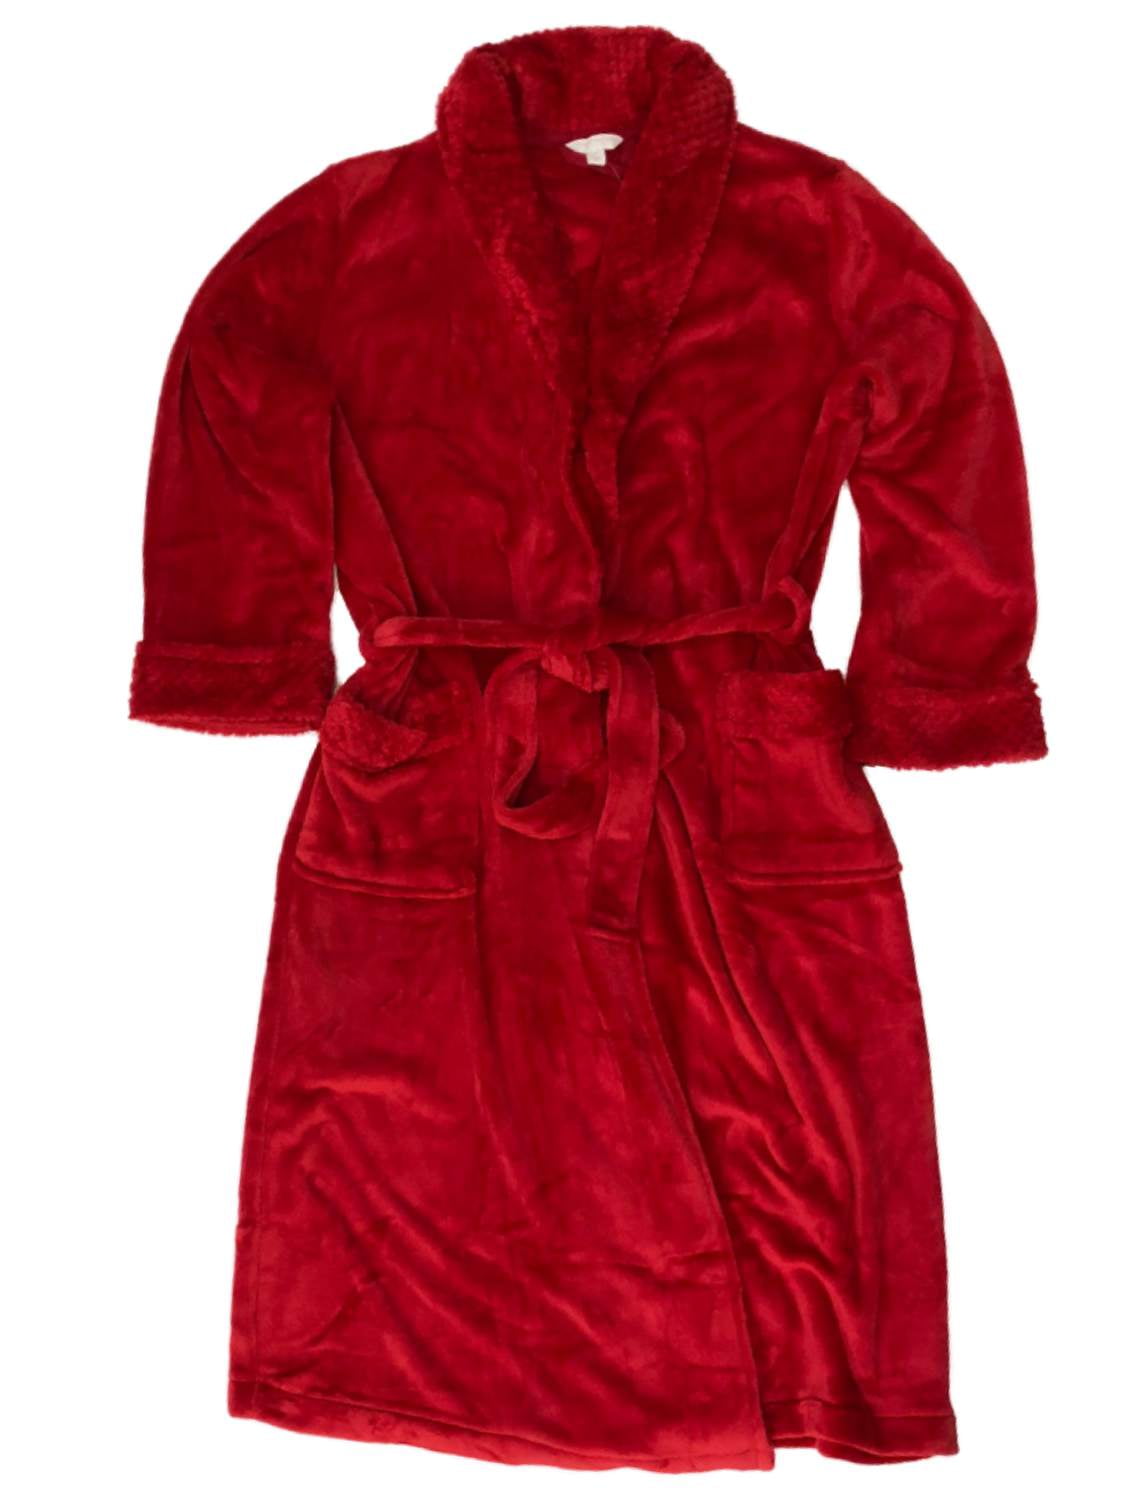 Charter Club - Womens Plush Red Dimpled Bathrobe House Coat Bath Robe ...